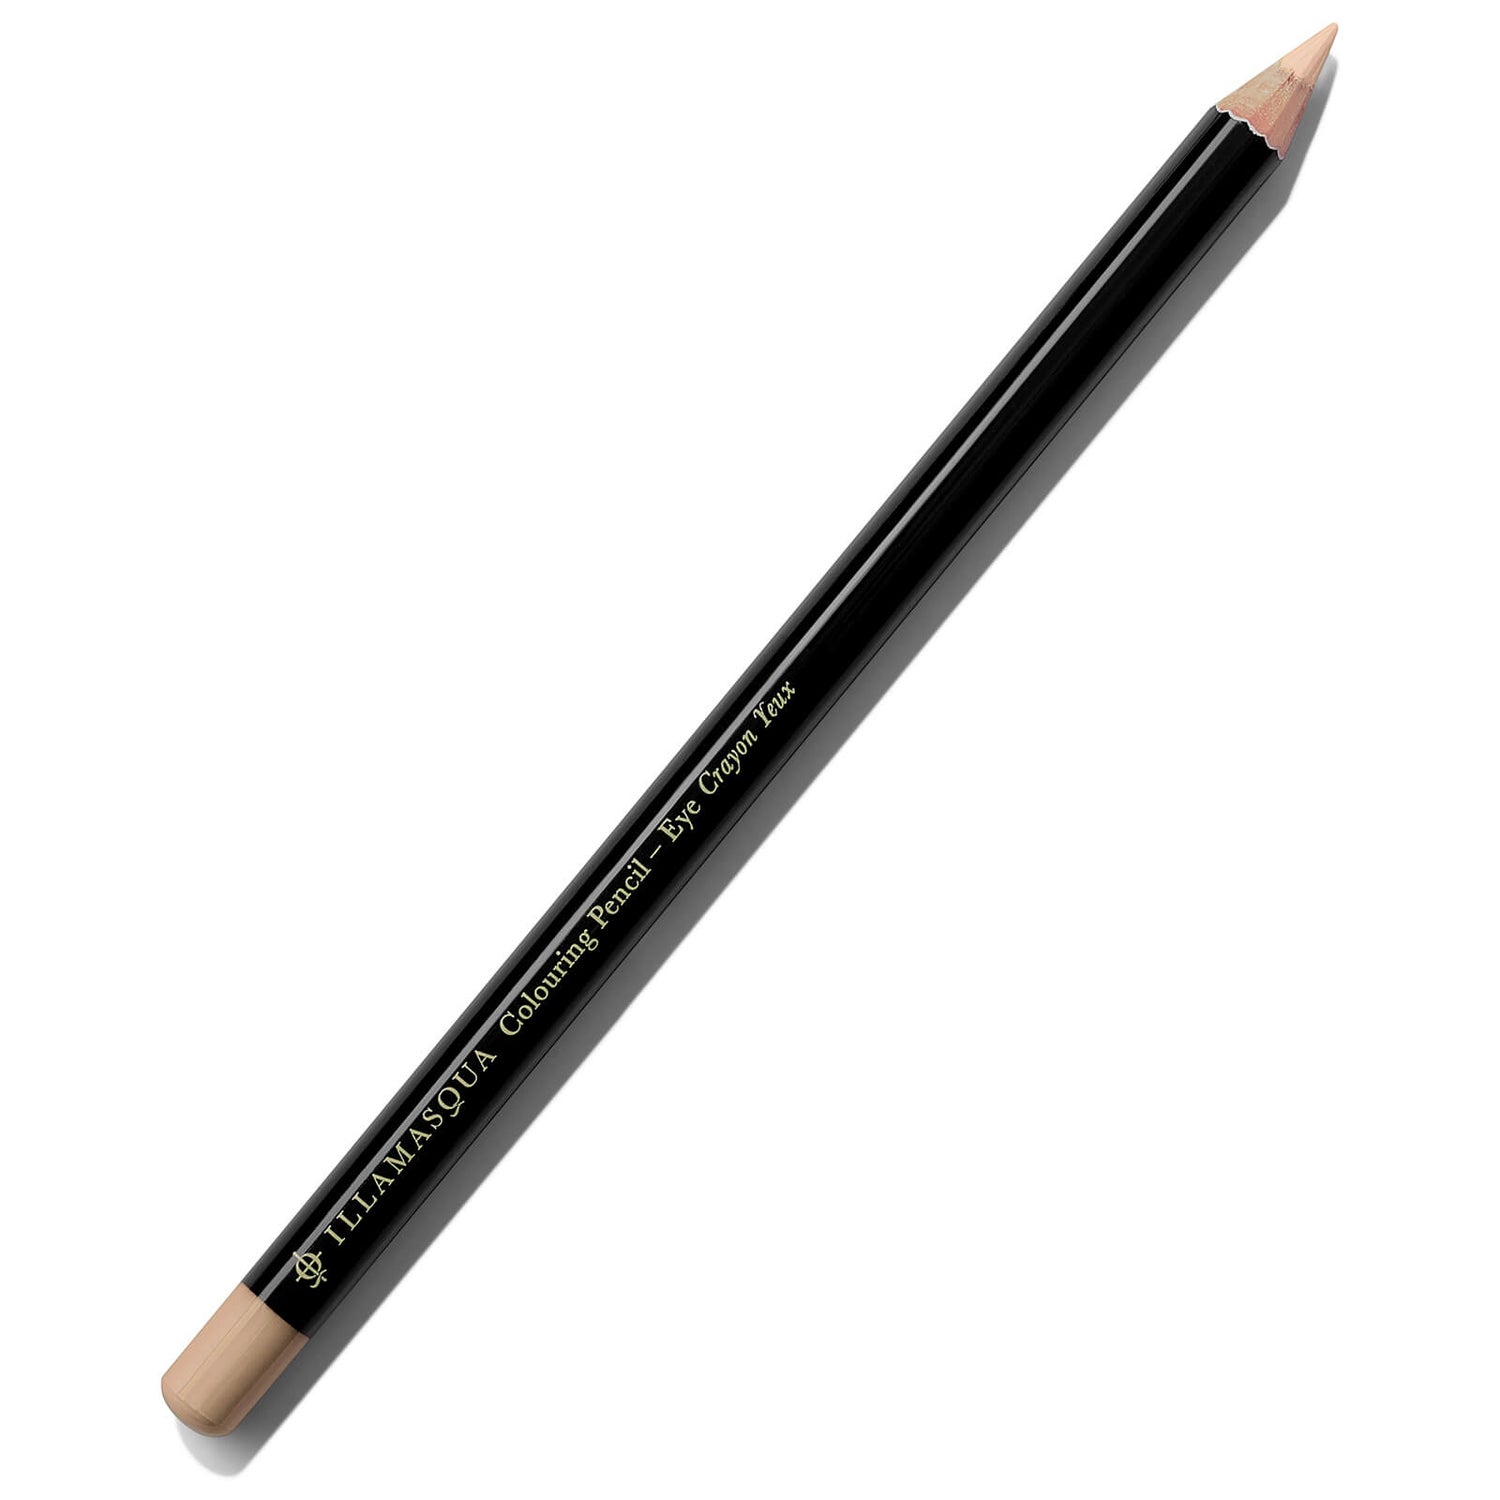 Illamasqua Colouring Eye Pencil 1.4g (Verschiedene Farbtöne) - Vow